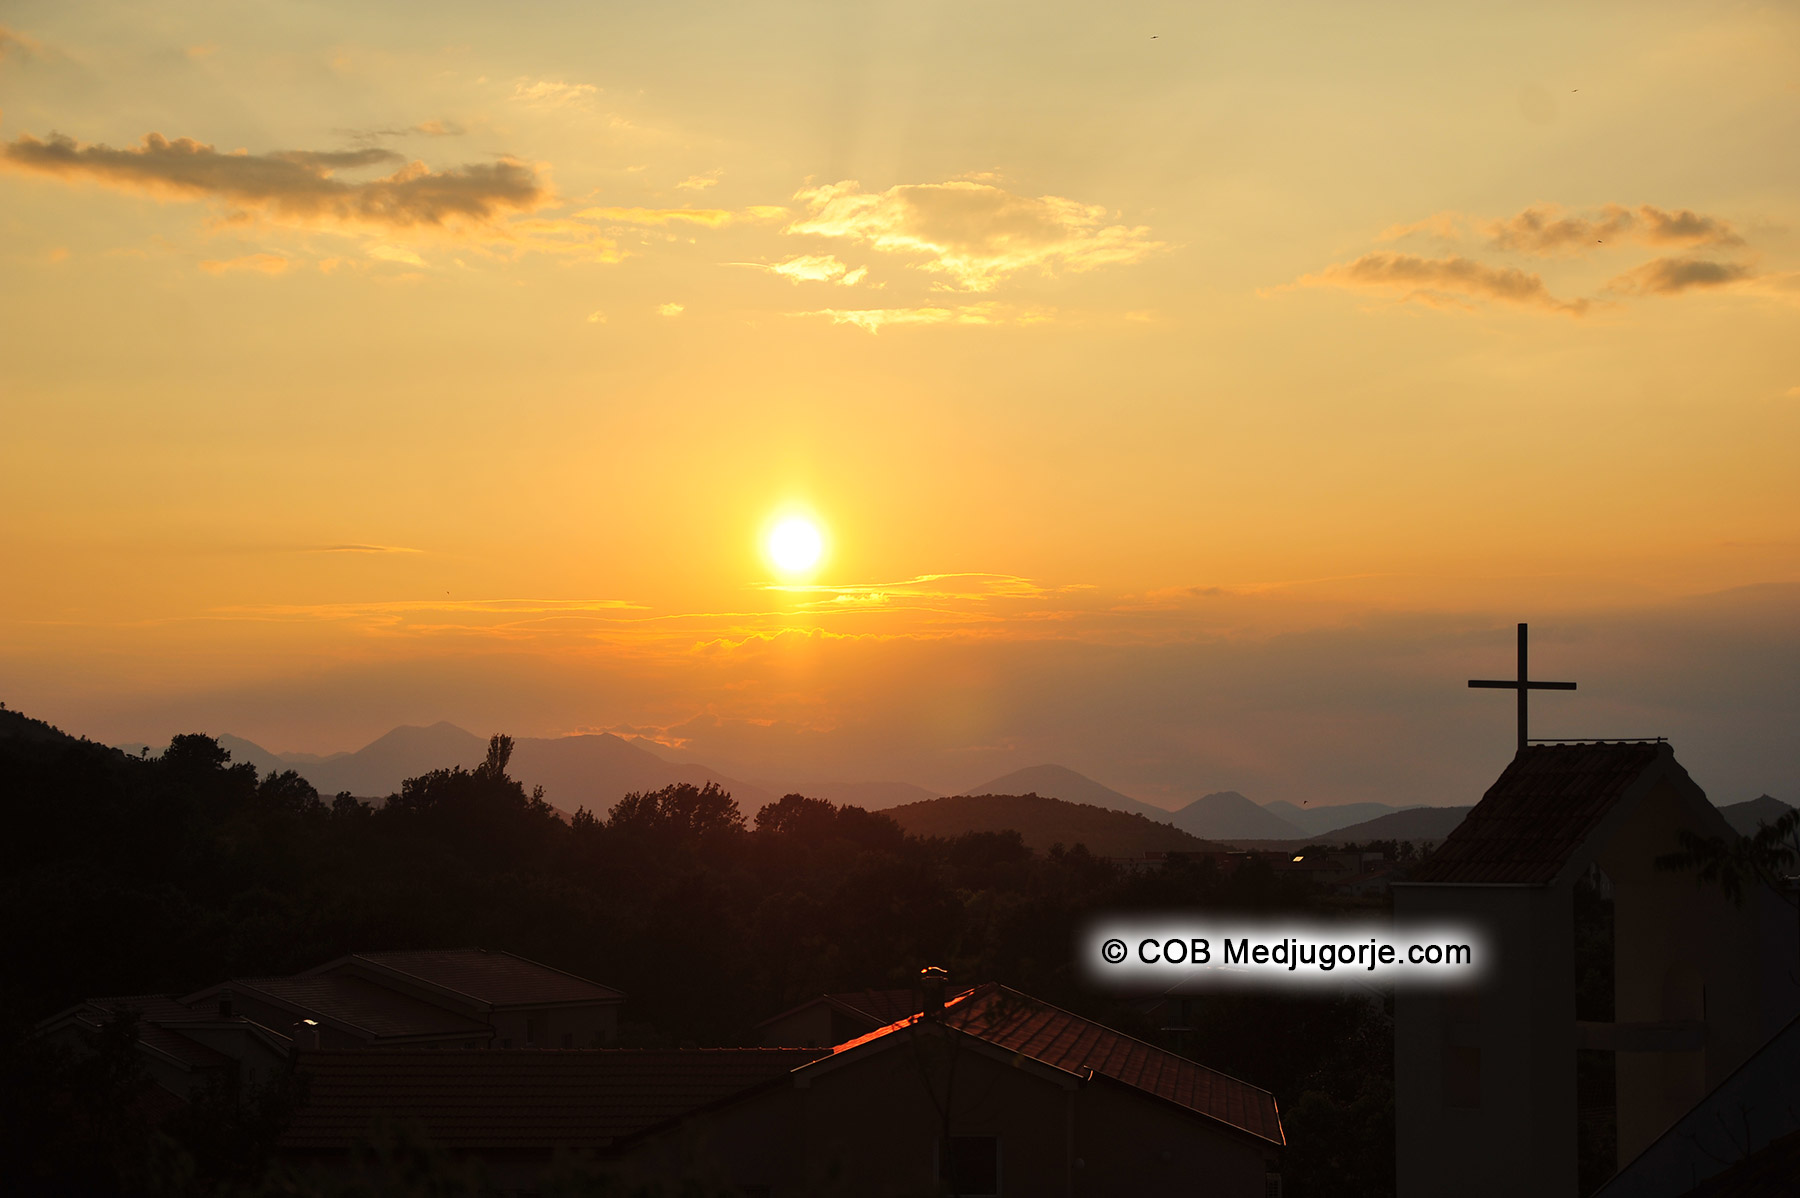 Sunset in Medjugorje August 2, 2014